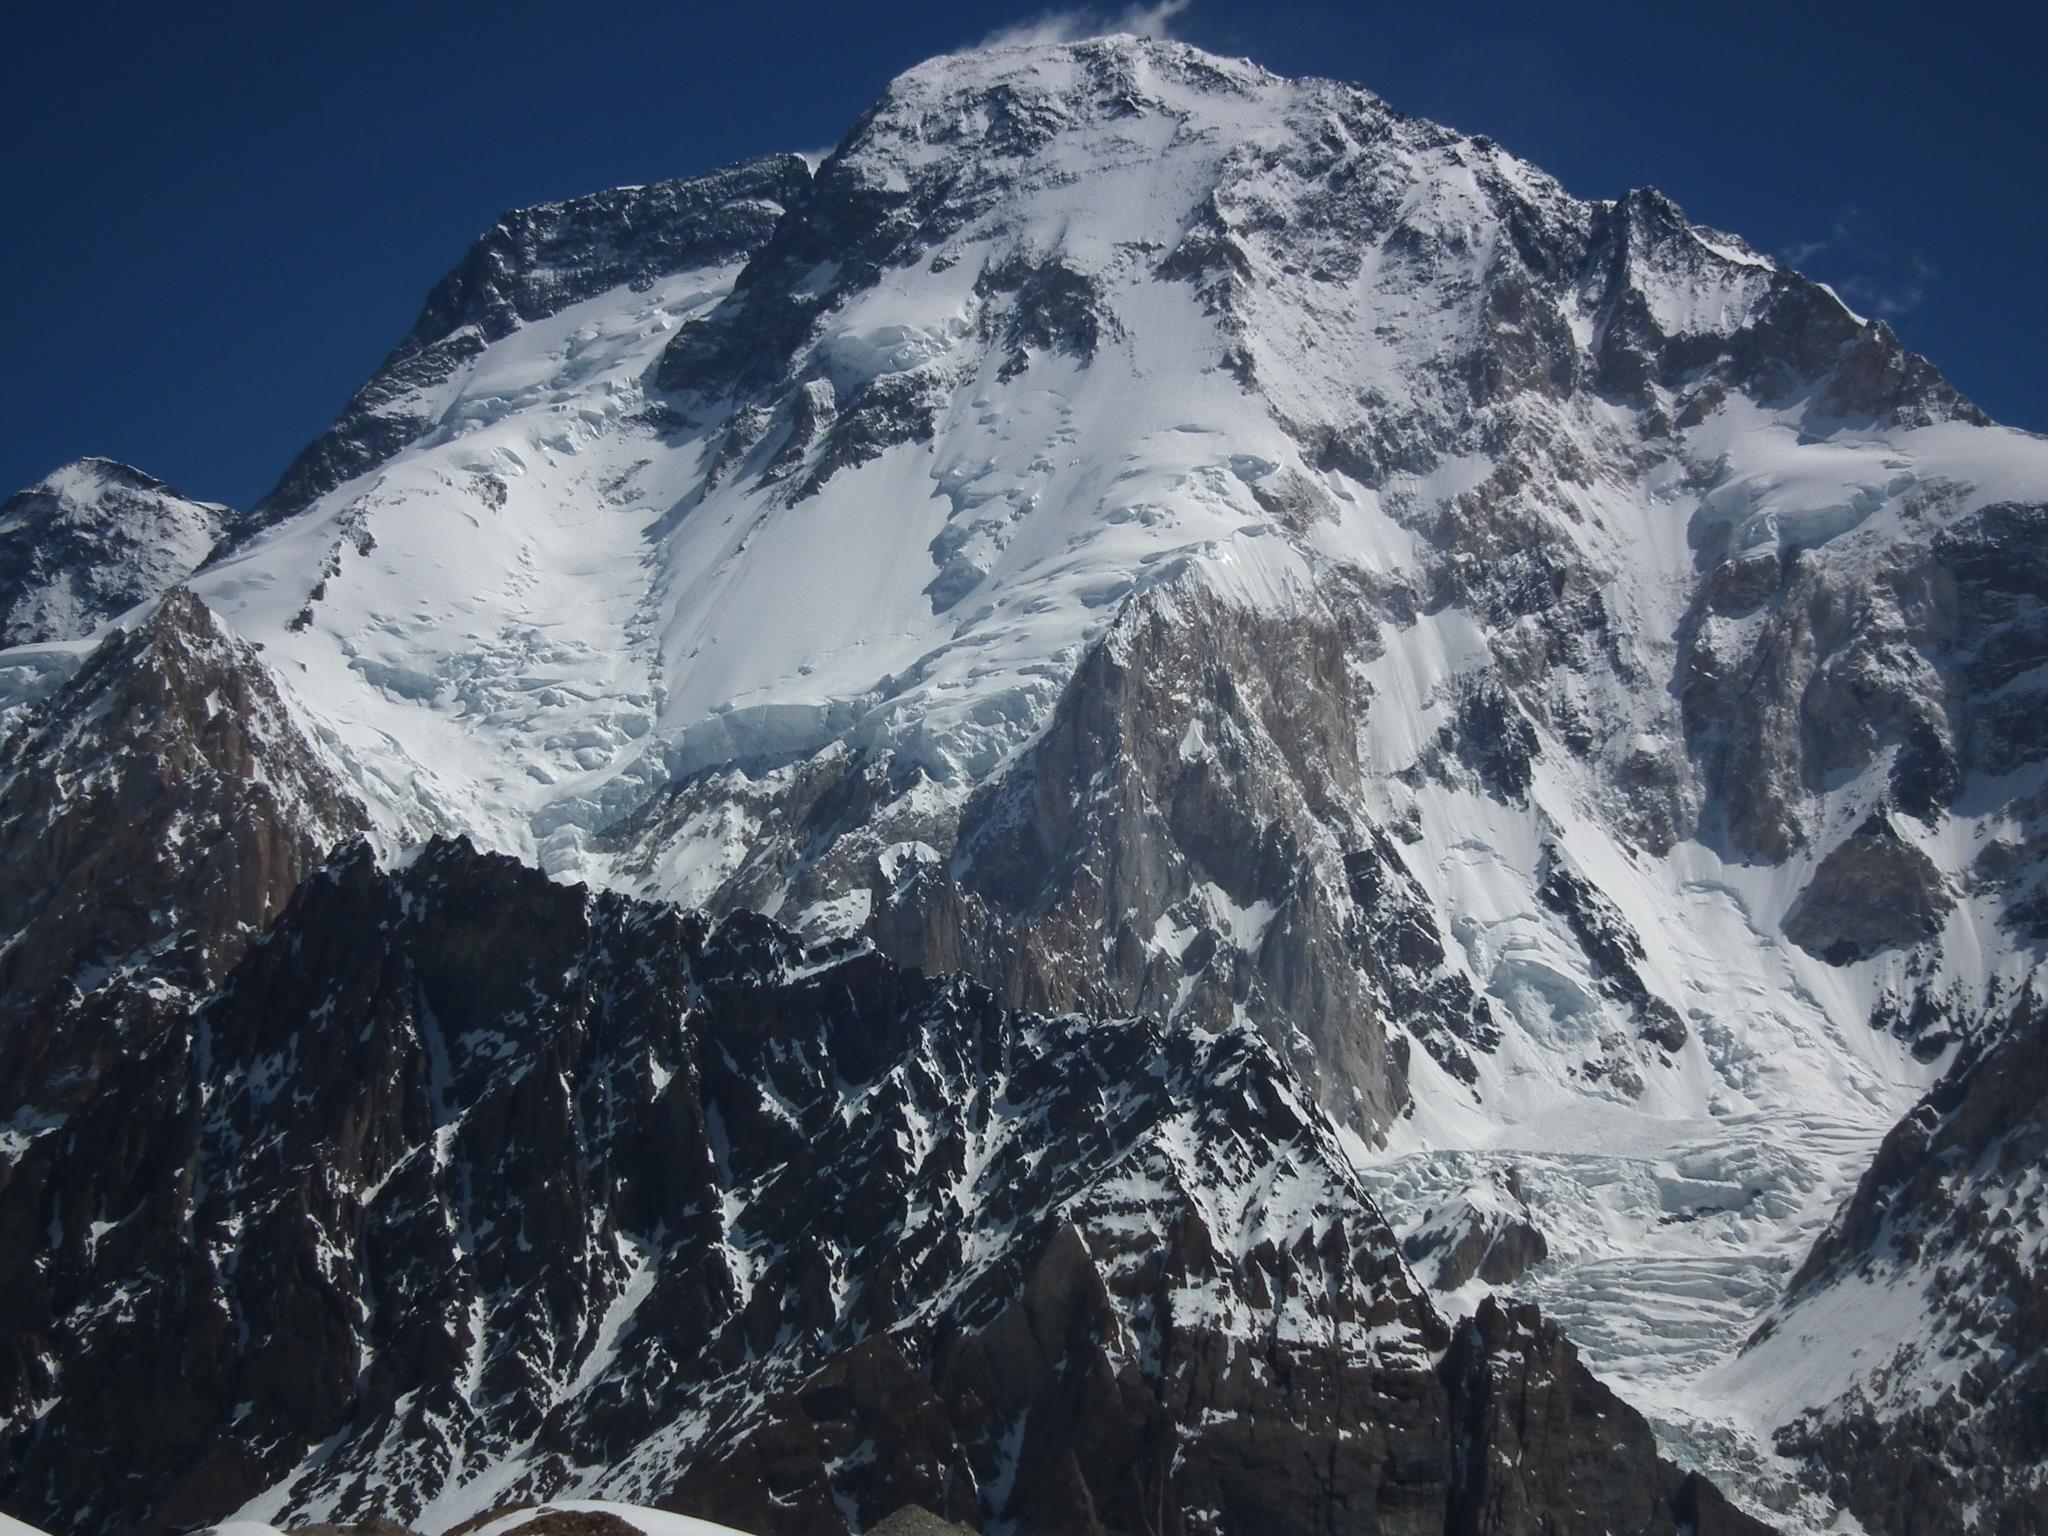 Broad Peak ( 8047 metres ) in the Karakorum Mountains of Pakistan - the world's twelfth highest mountain